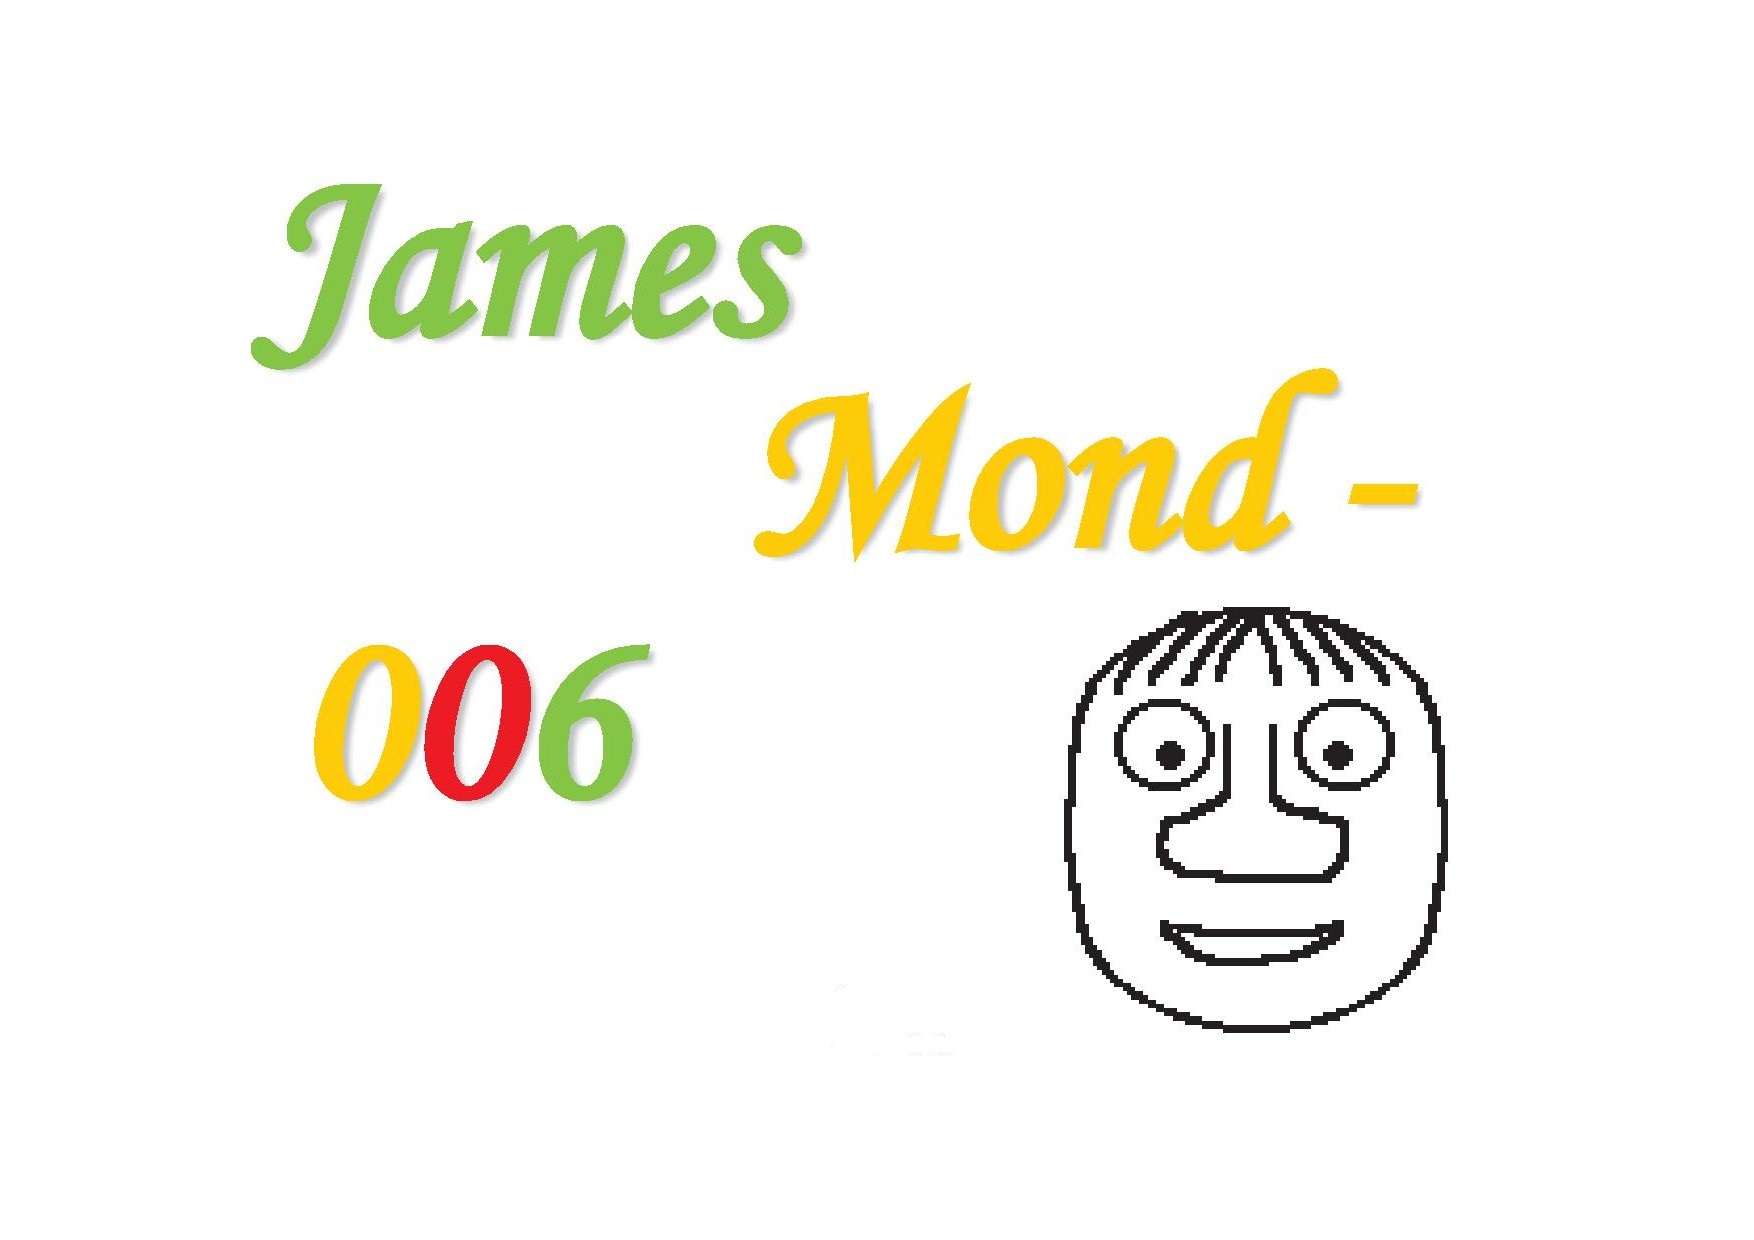 James Mond